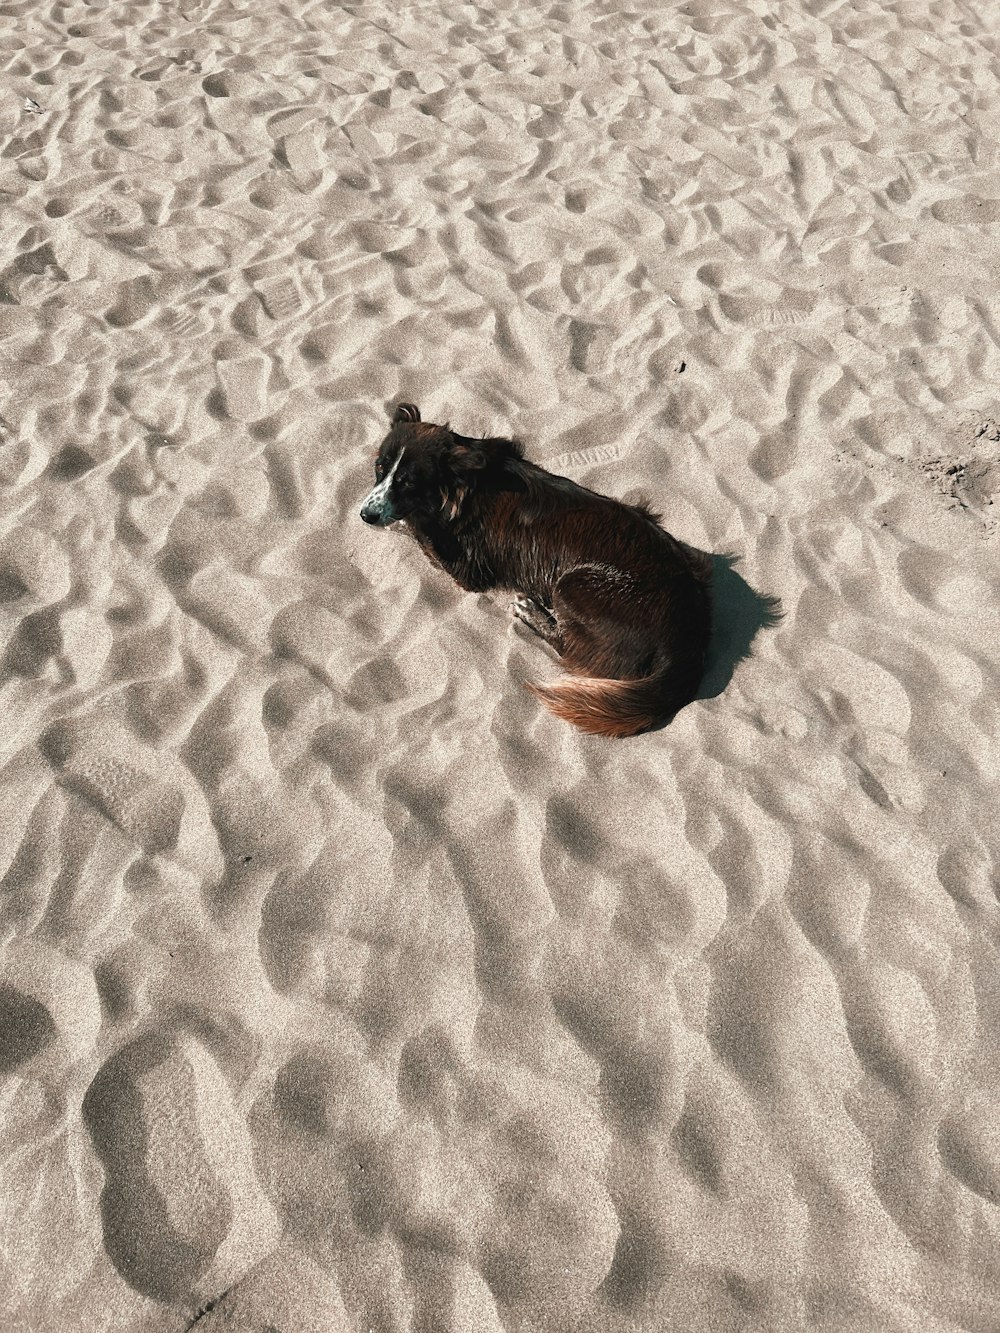 a dog lying on the sand